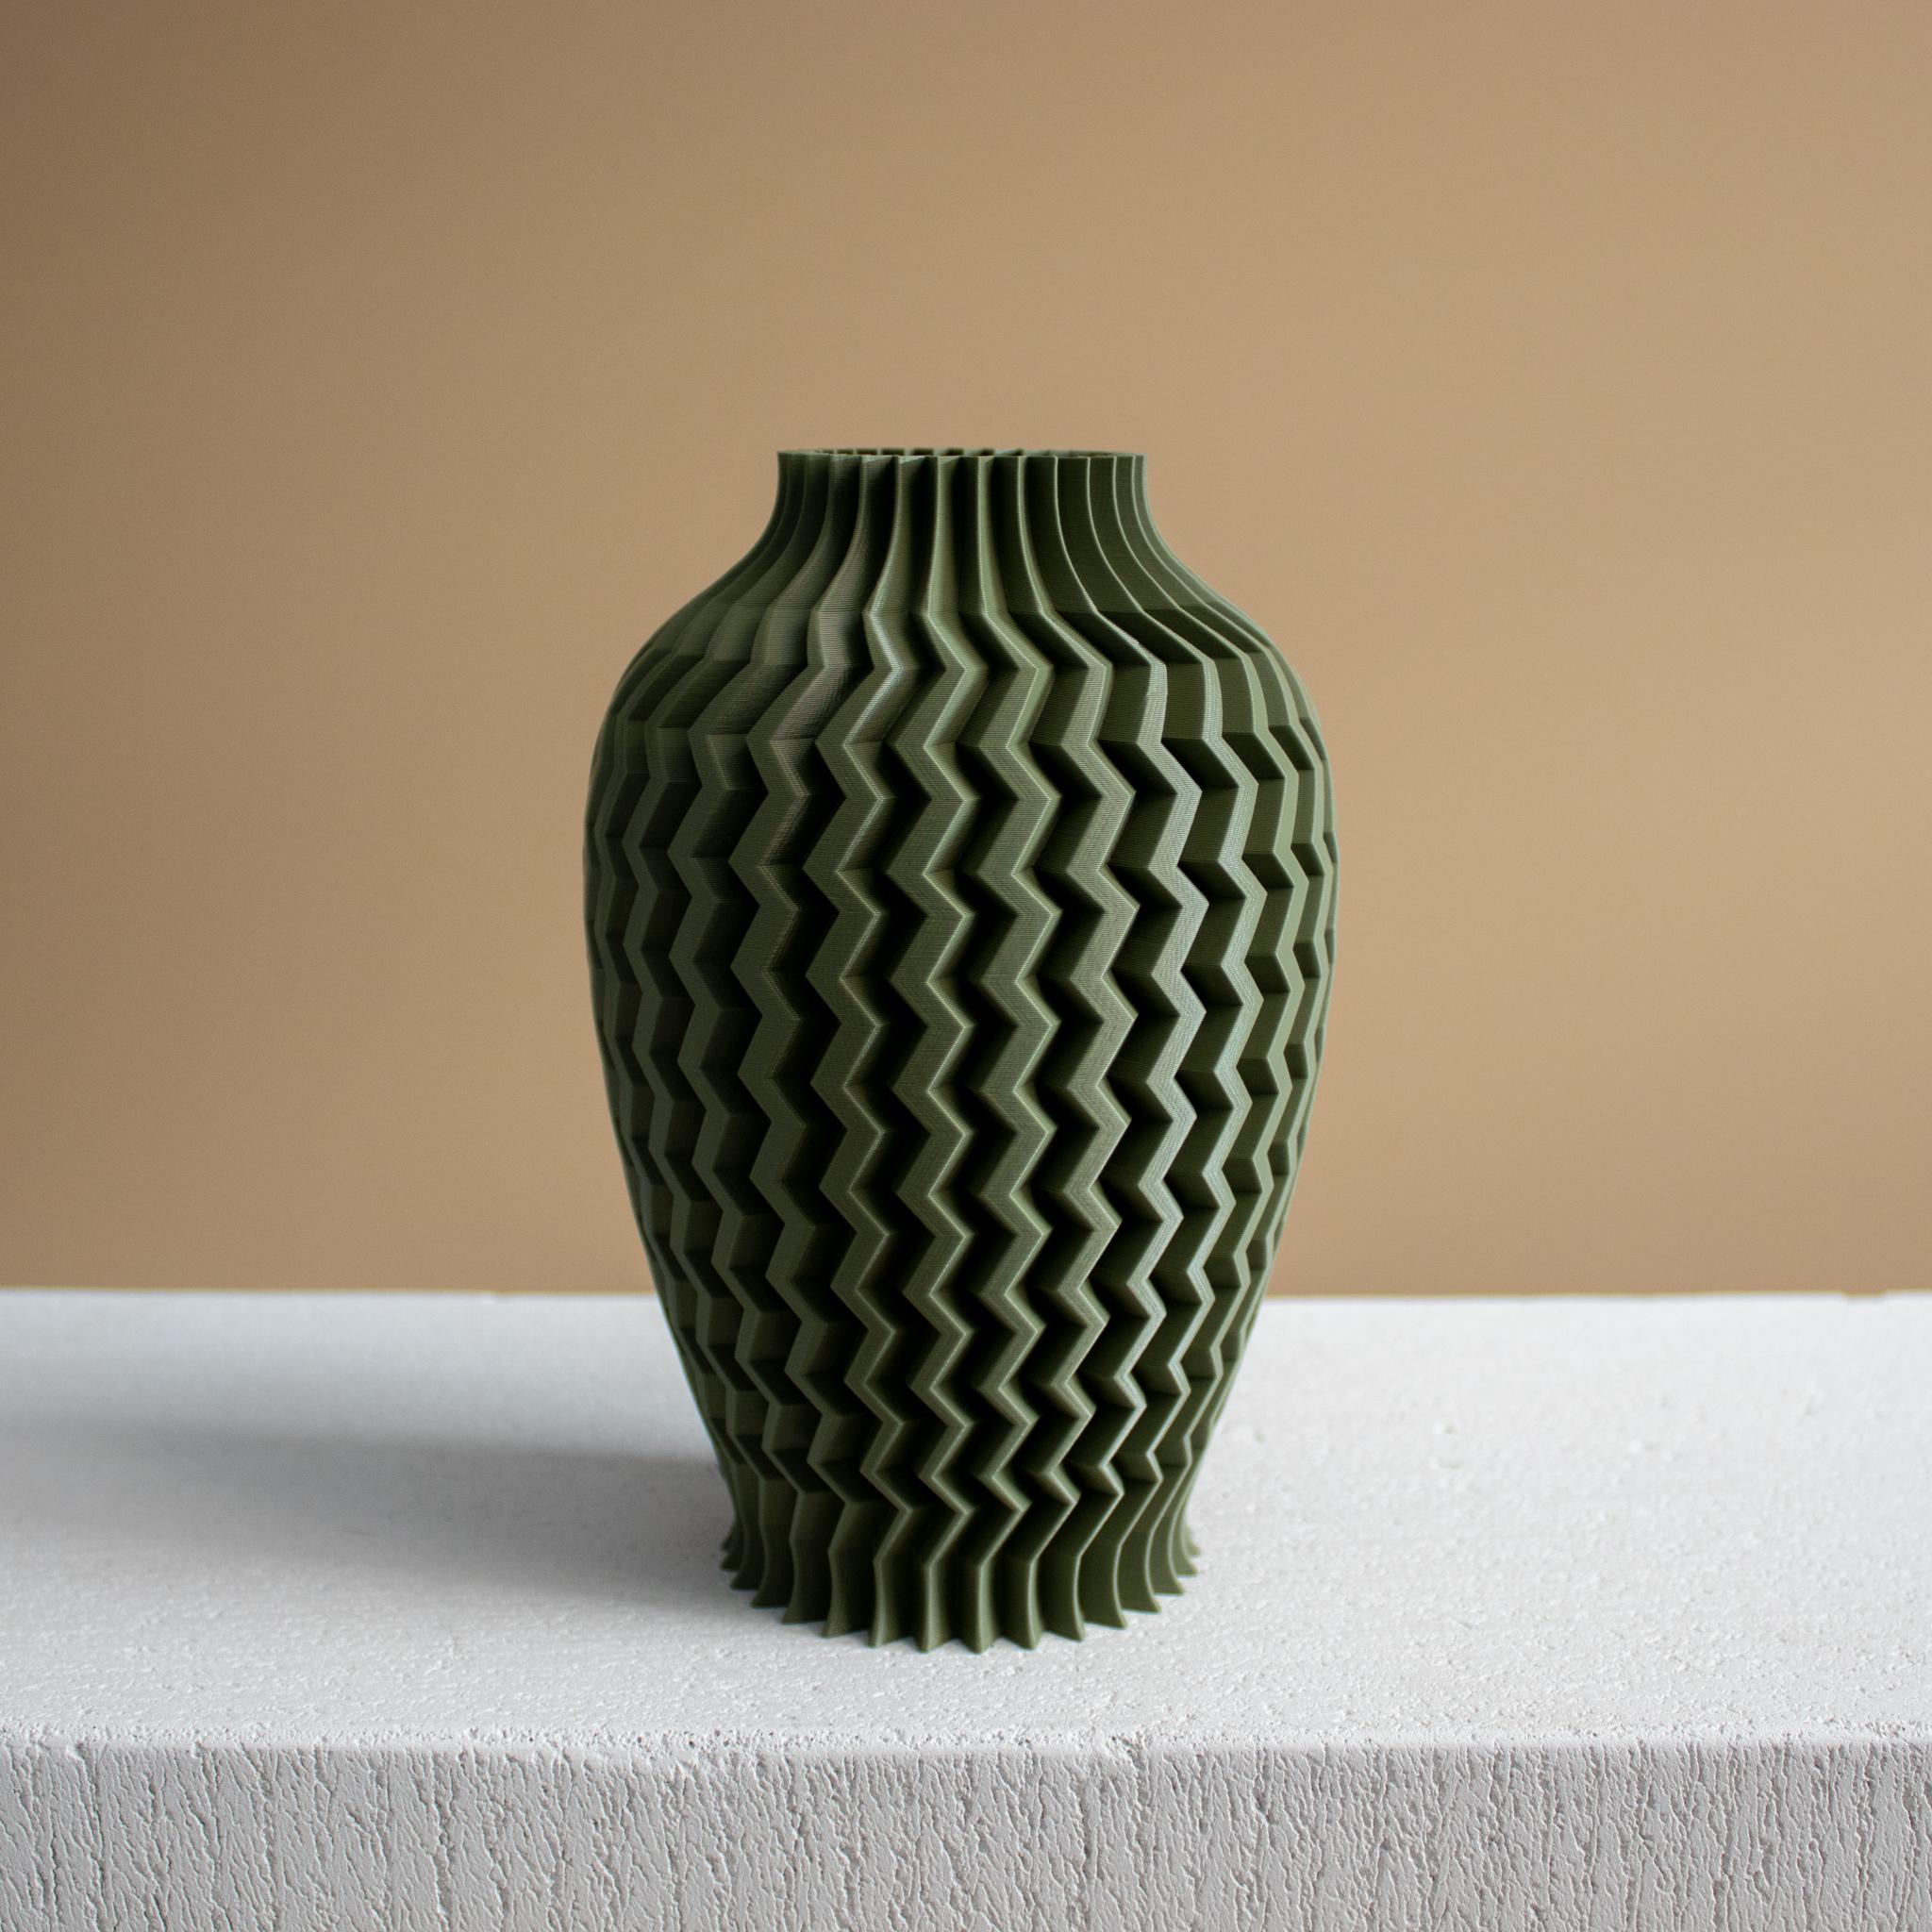  Textured Vase - ZigZag (Vase Mode)  3d model